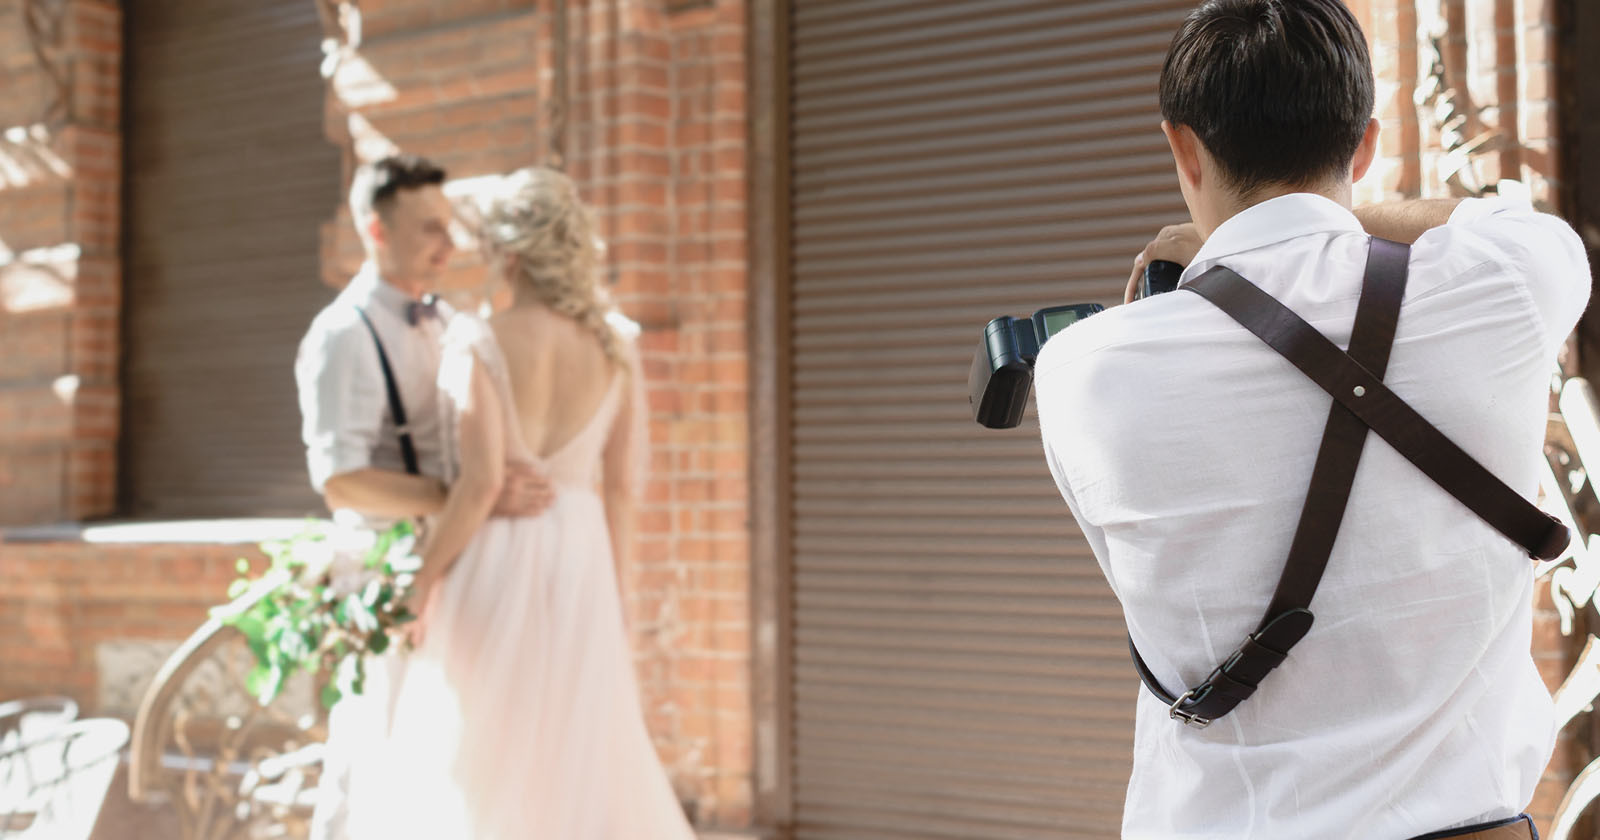  wedding photographer divides internet safety shot technique 